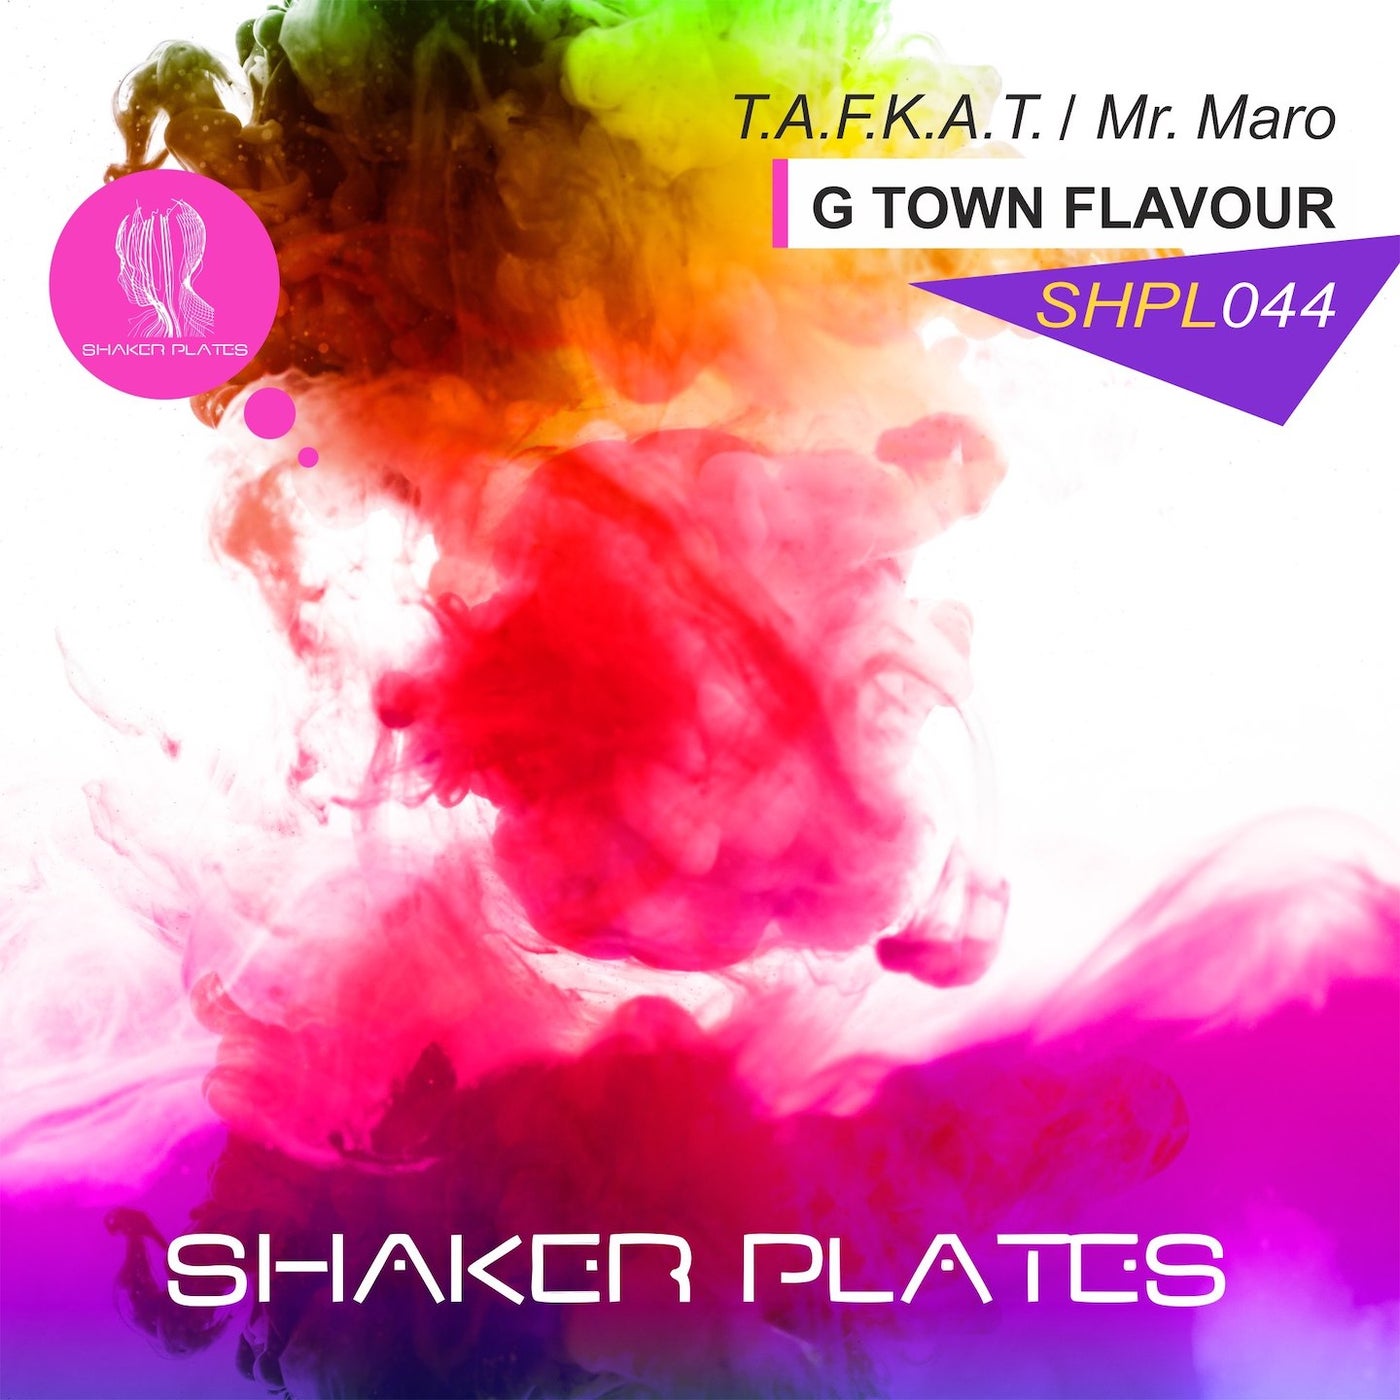 T.A.F.K.A.T. & Mr. Maro - G Town Flavour [SHPL044]